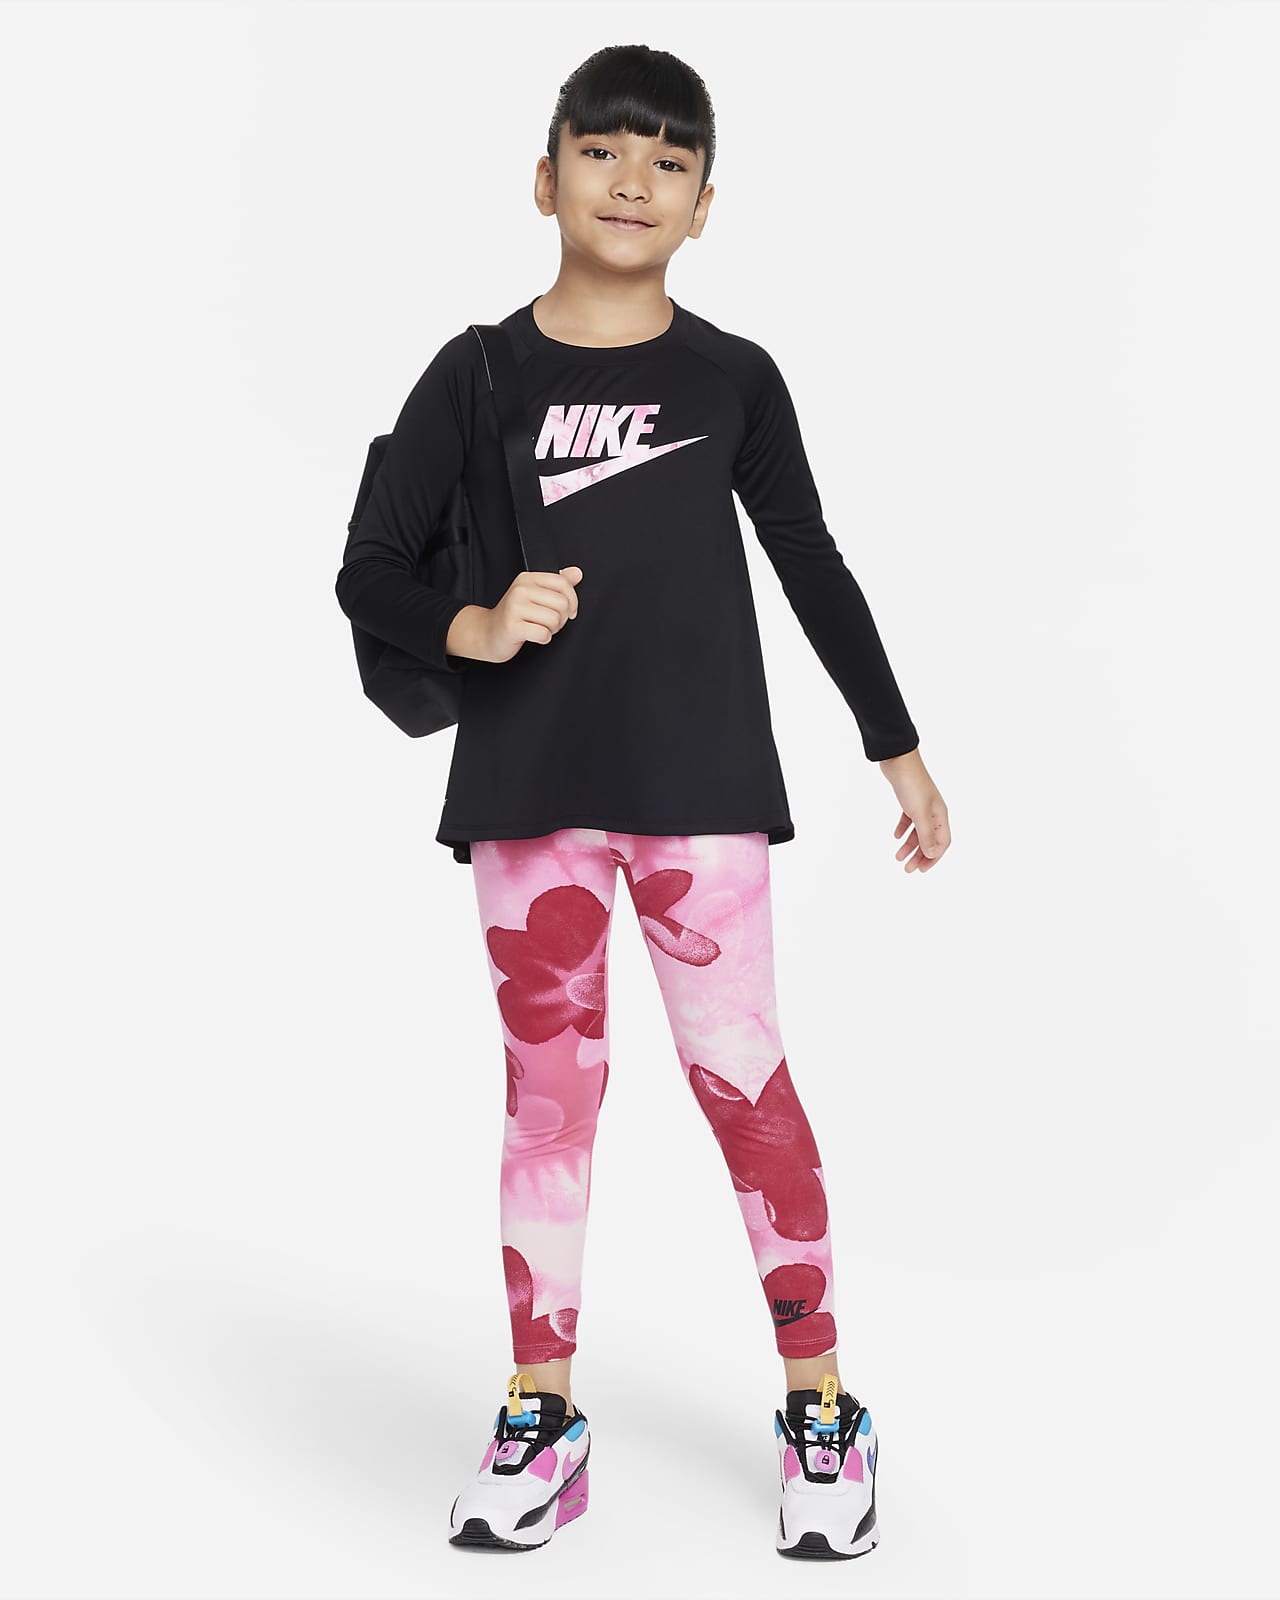 Nike Toddler Crew and Leggings Set